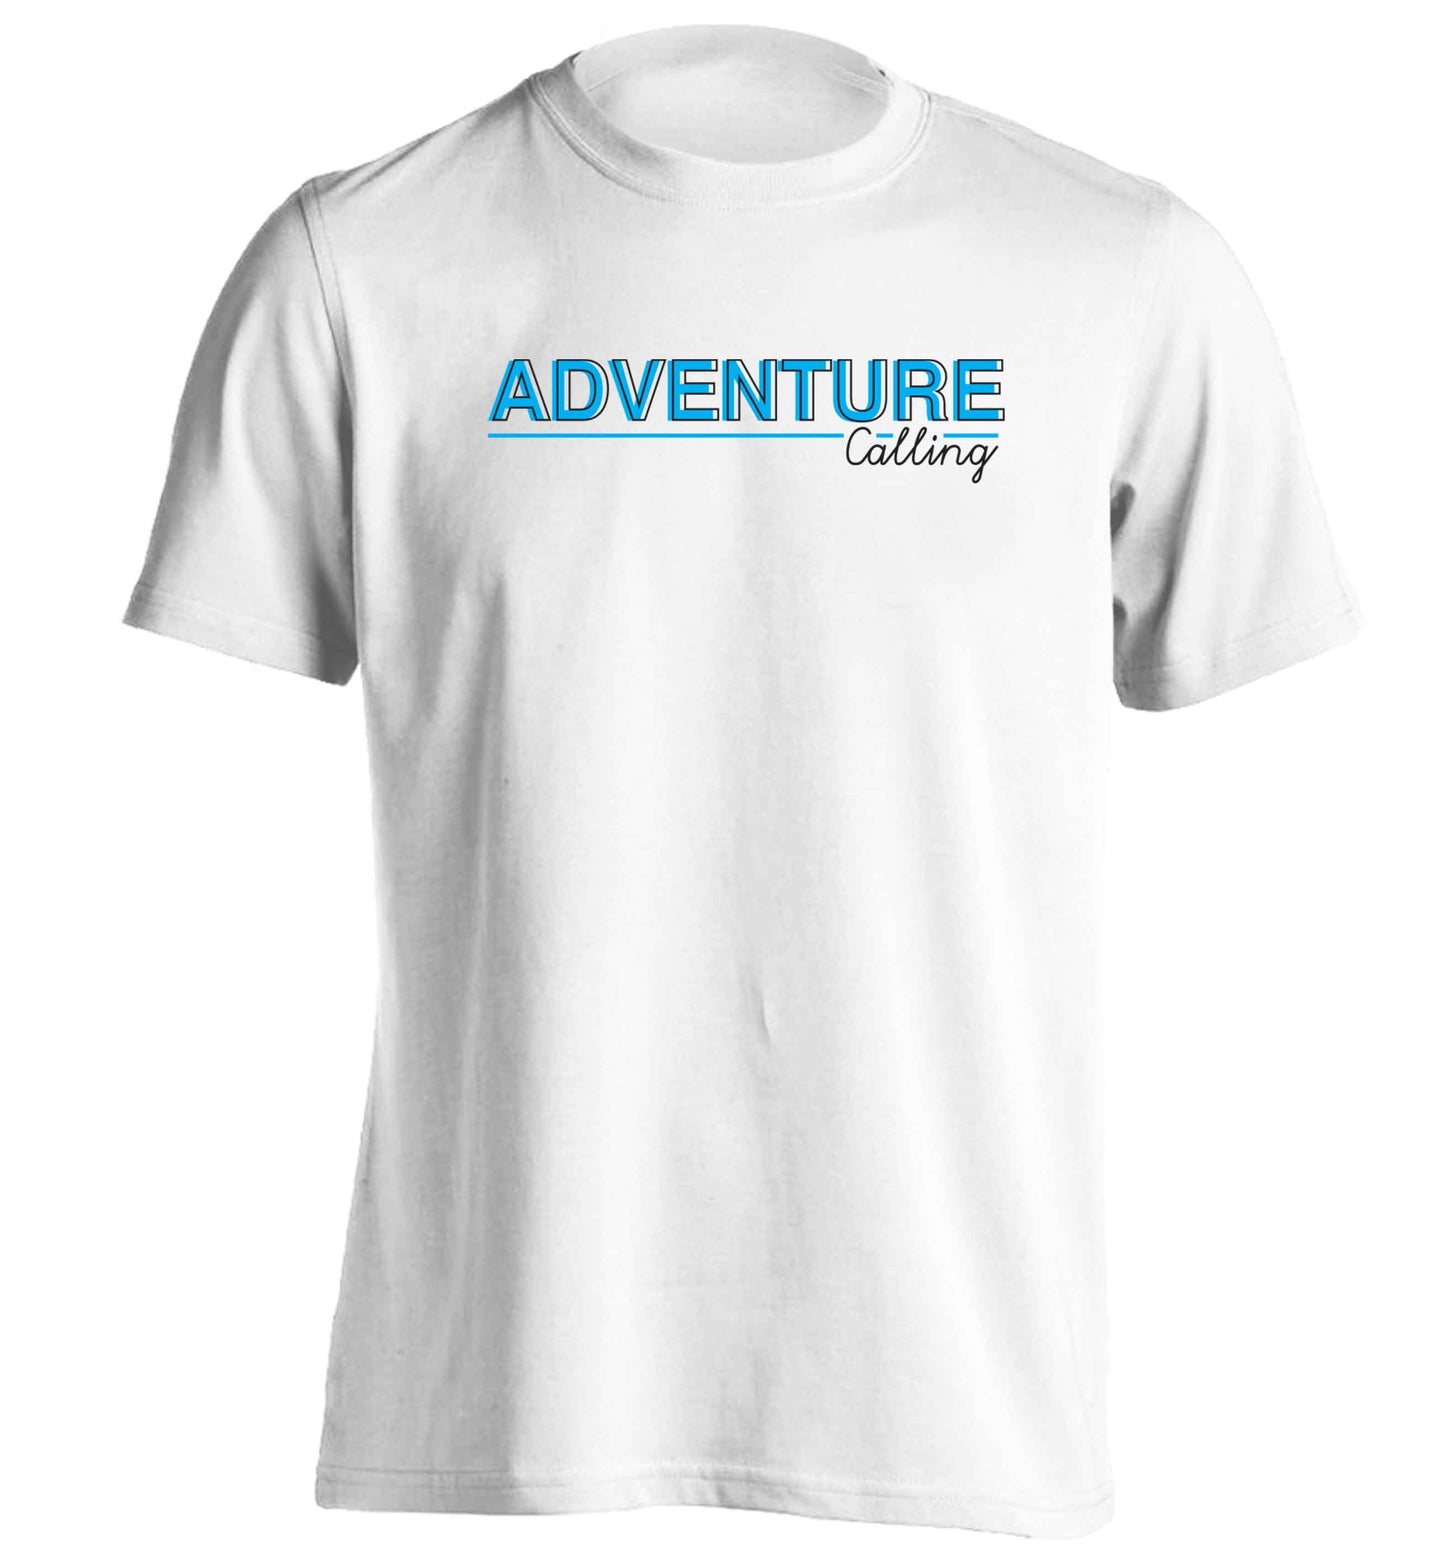 Adventure calling adults unisex white Tshirt 2XL